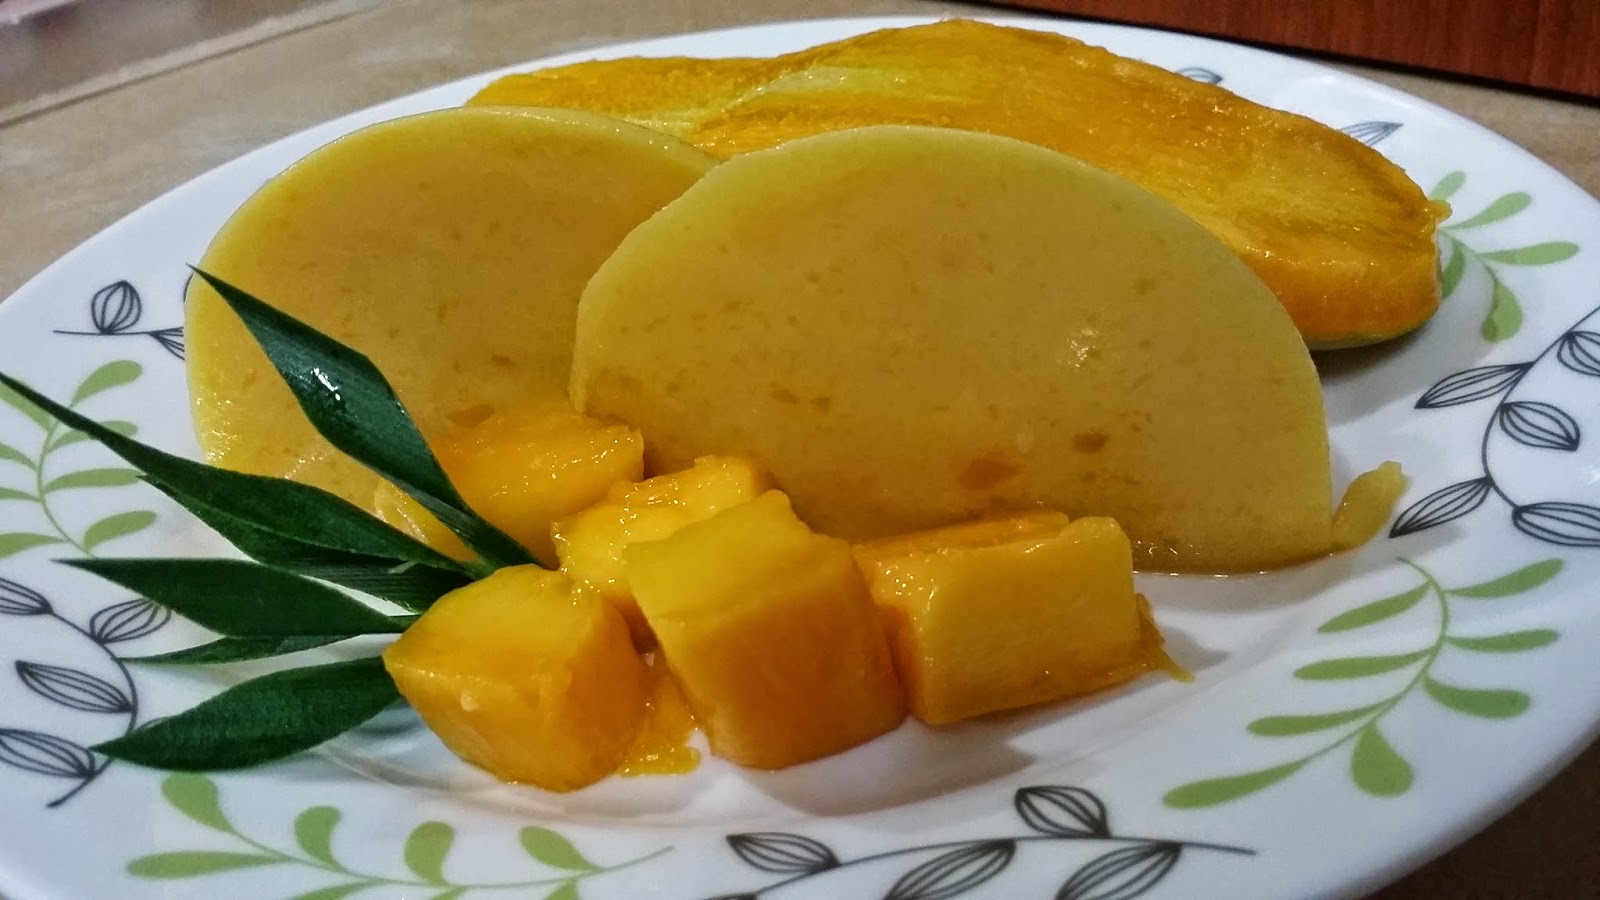 ZULFAZA LOVES COOKING: Fresh mango pudding/puding mangga segar